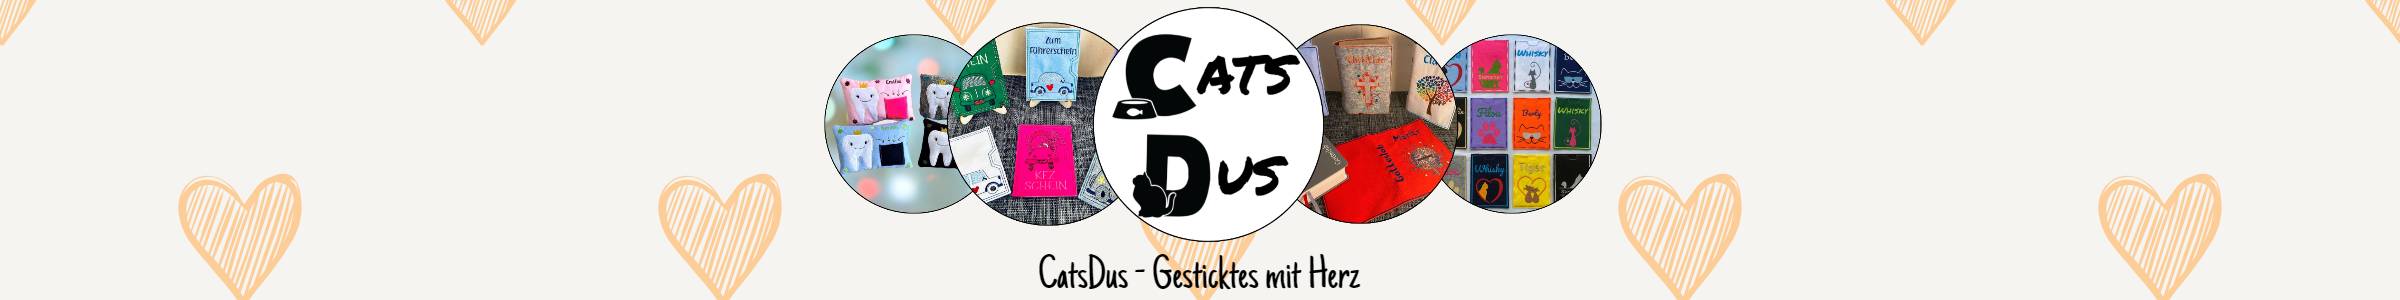 CatsDusShop Shop | kasuwa.de